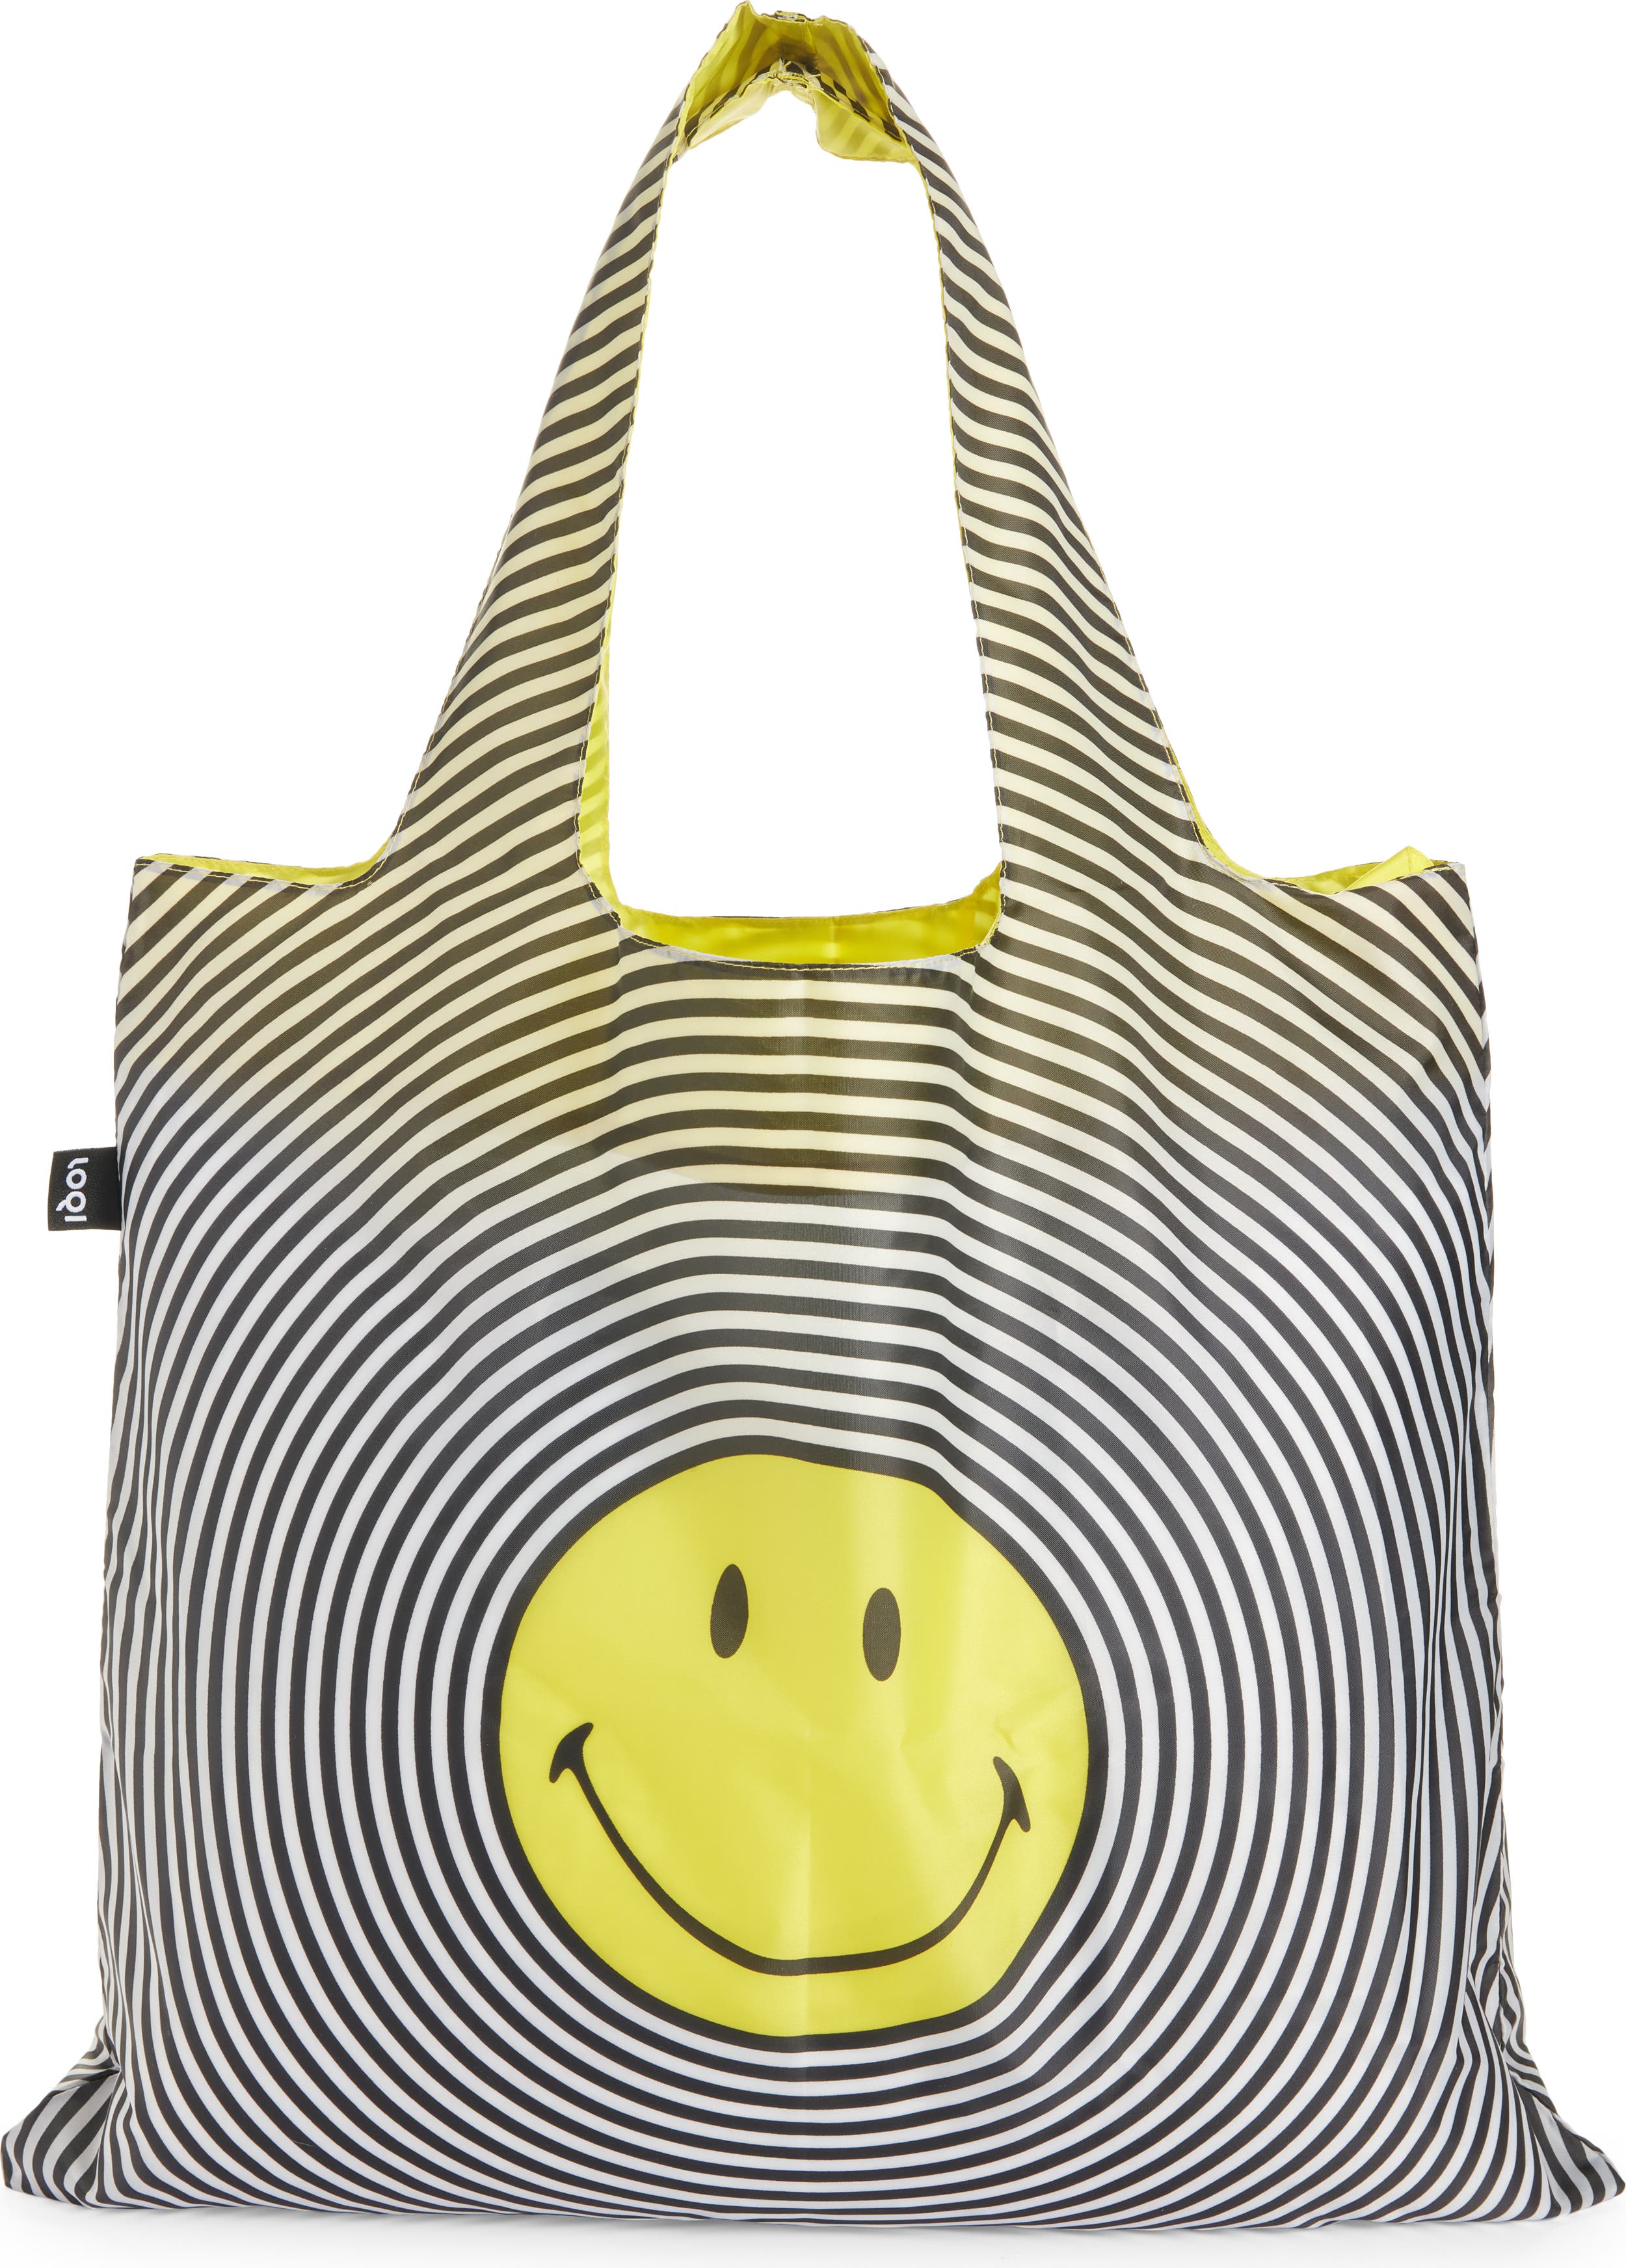 LOQI Grocery Shopping Tote Bag SMILEY FACE SPIRAL Emoji Yellow Black Reusable